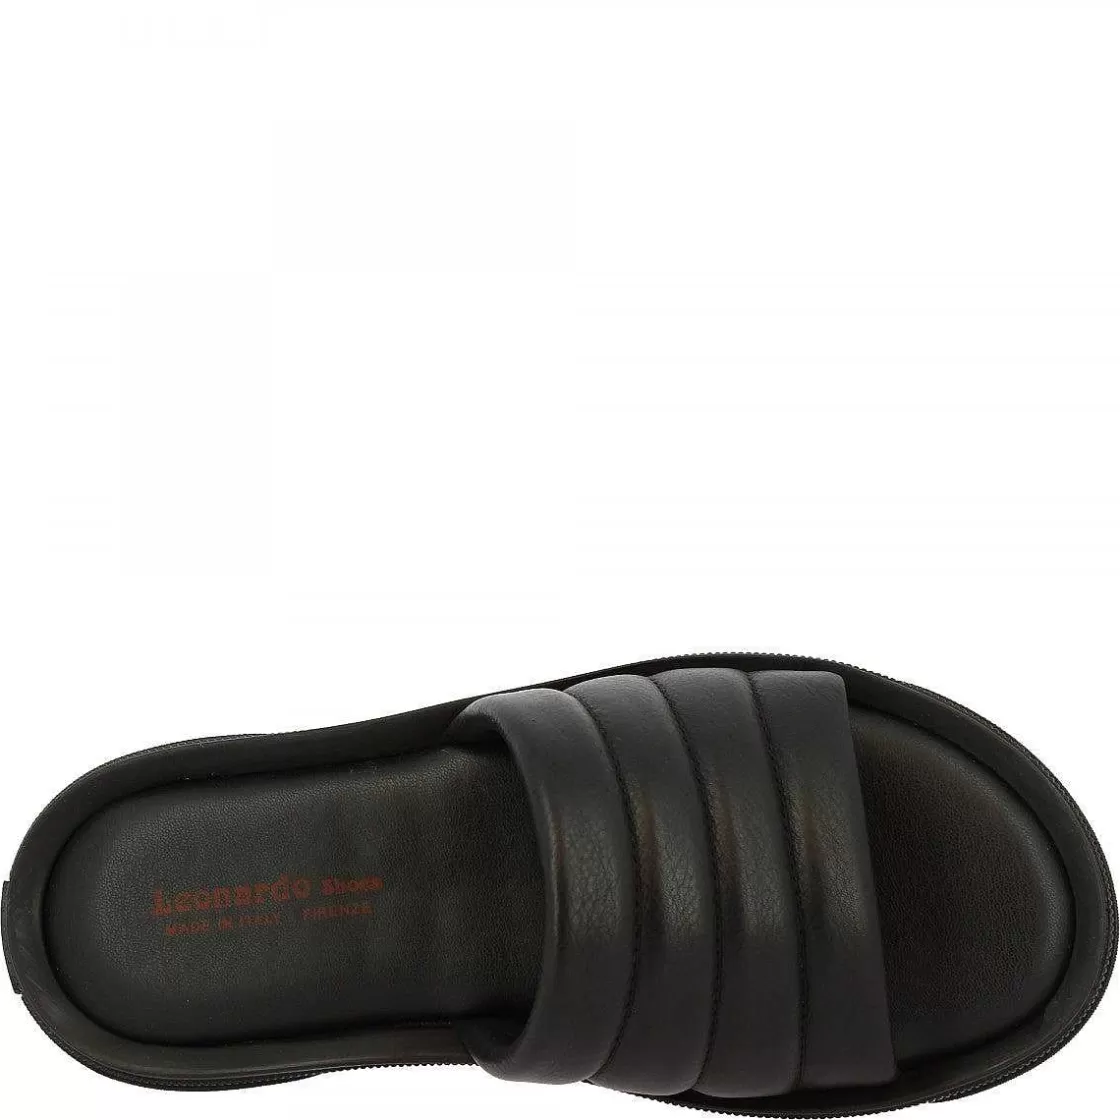 Leonardo Men'S Slipper Sandals With Wide Band Handmade In Black Calf Leather Best Sale